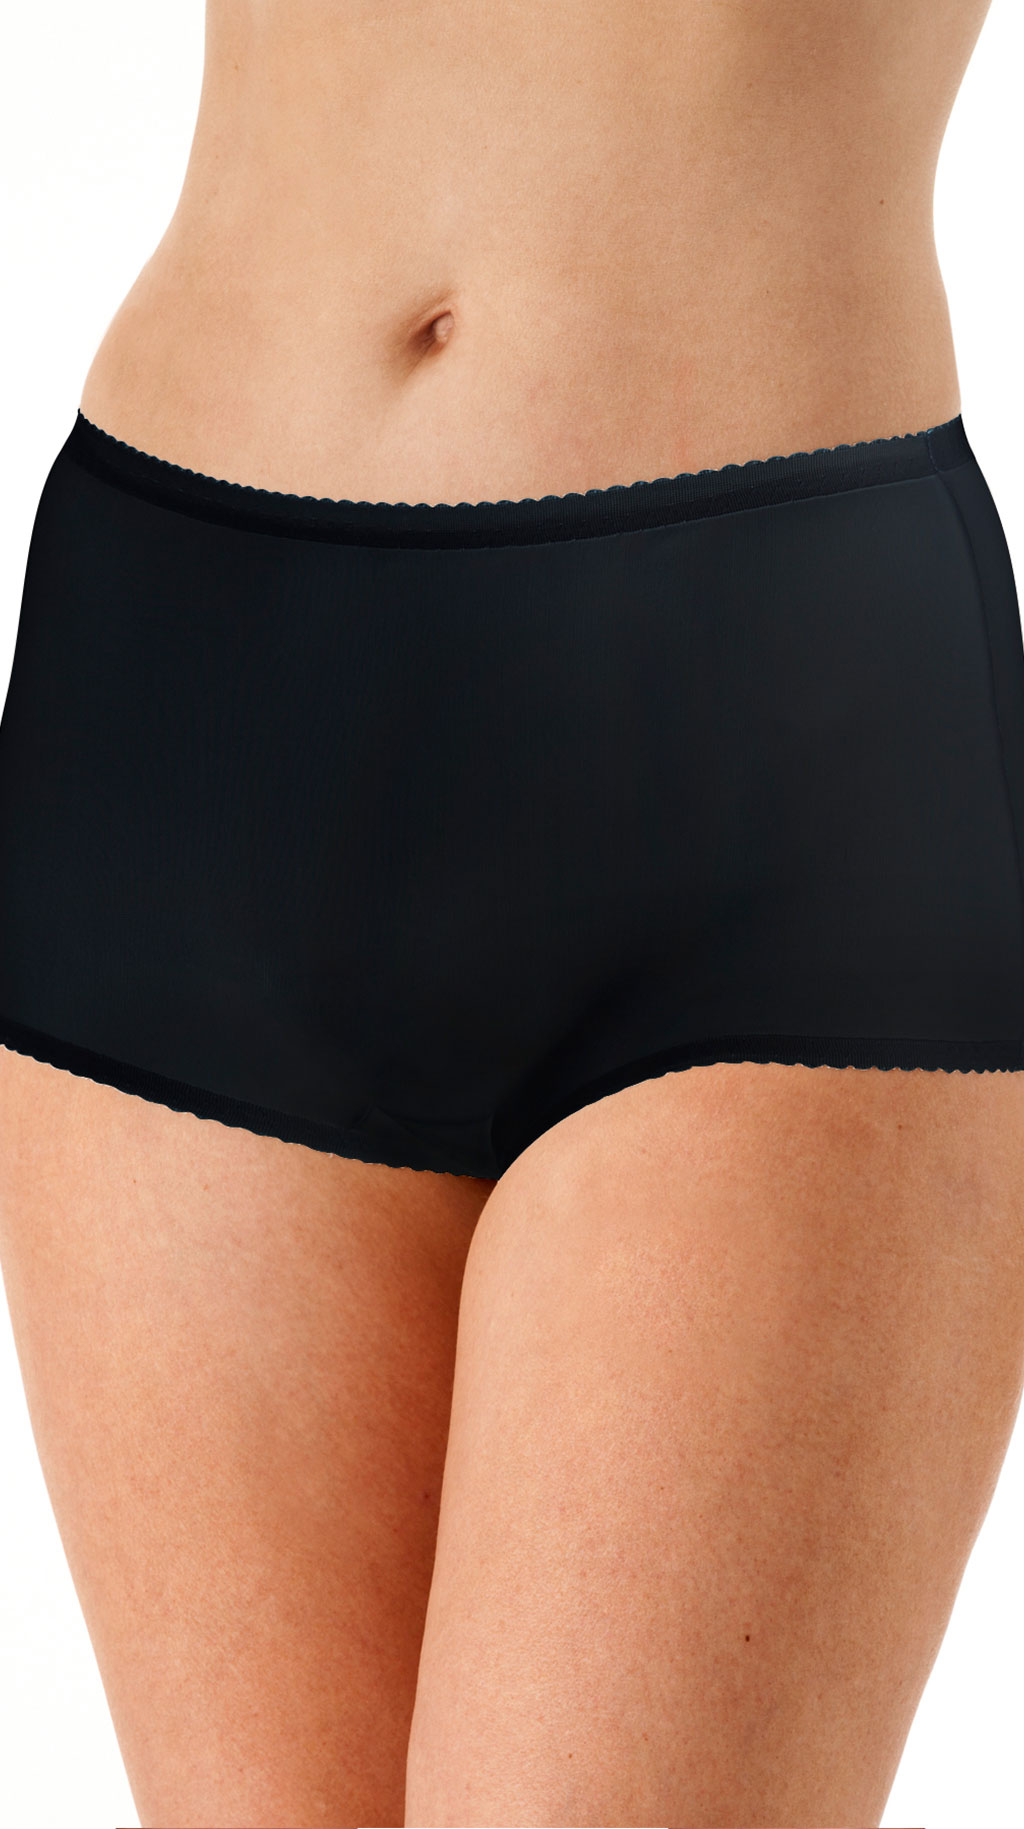 Women's Nylon Modern Brief Panties